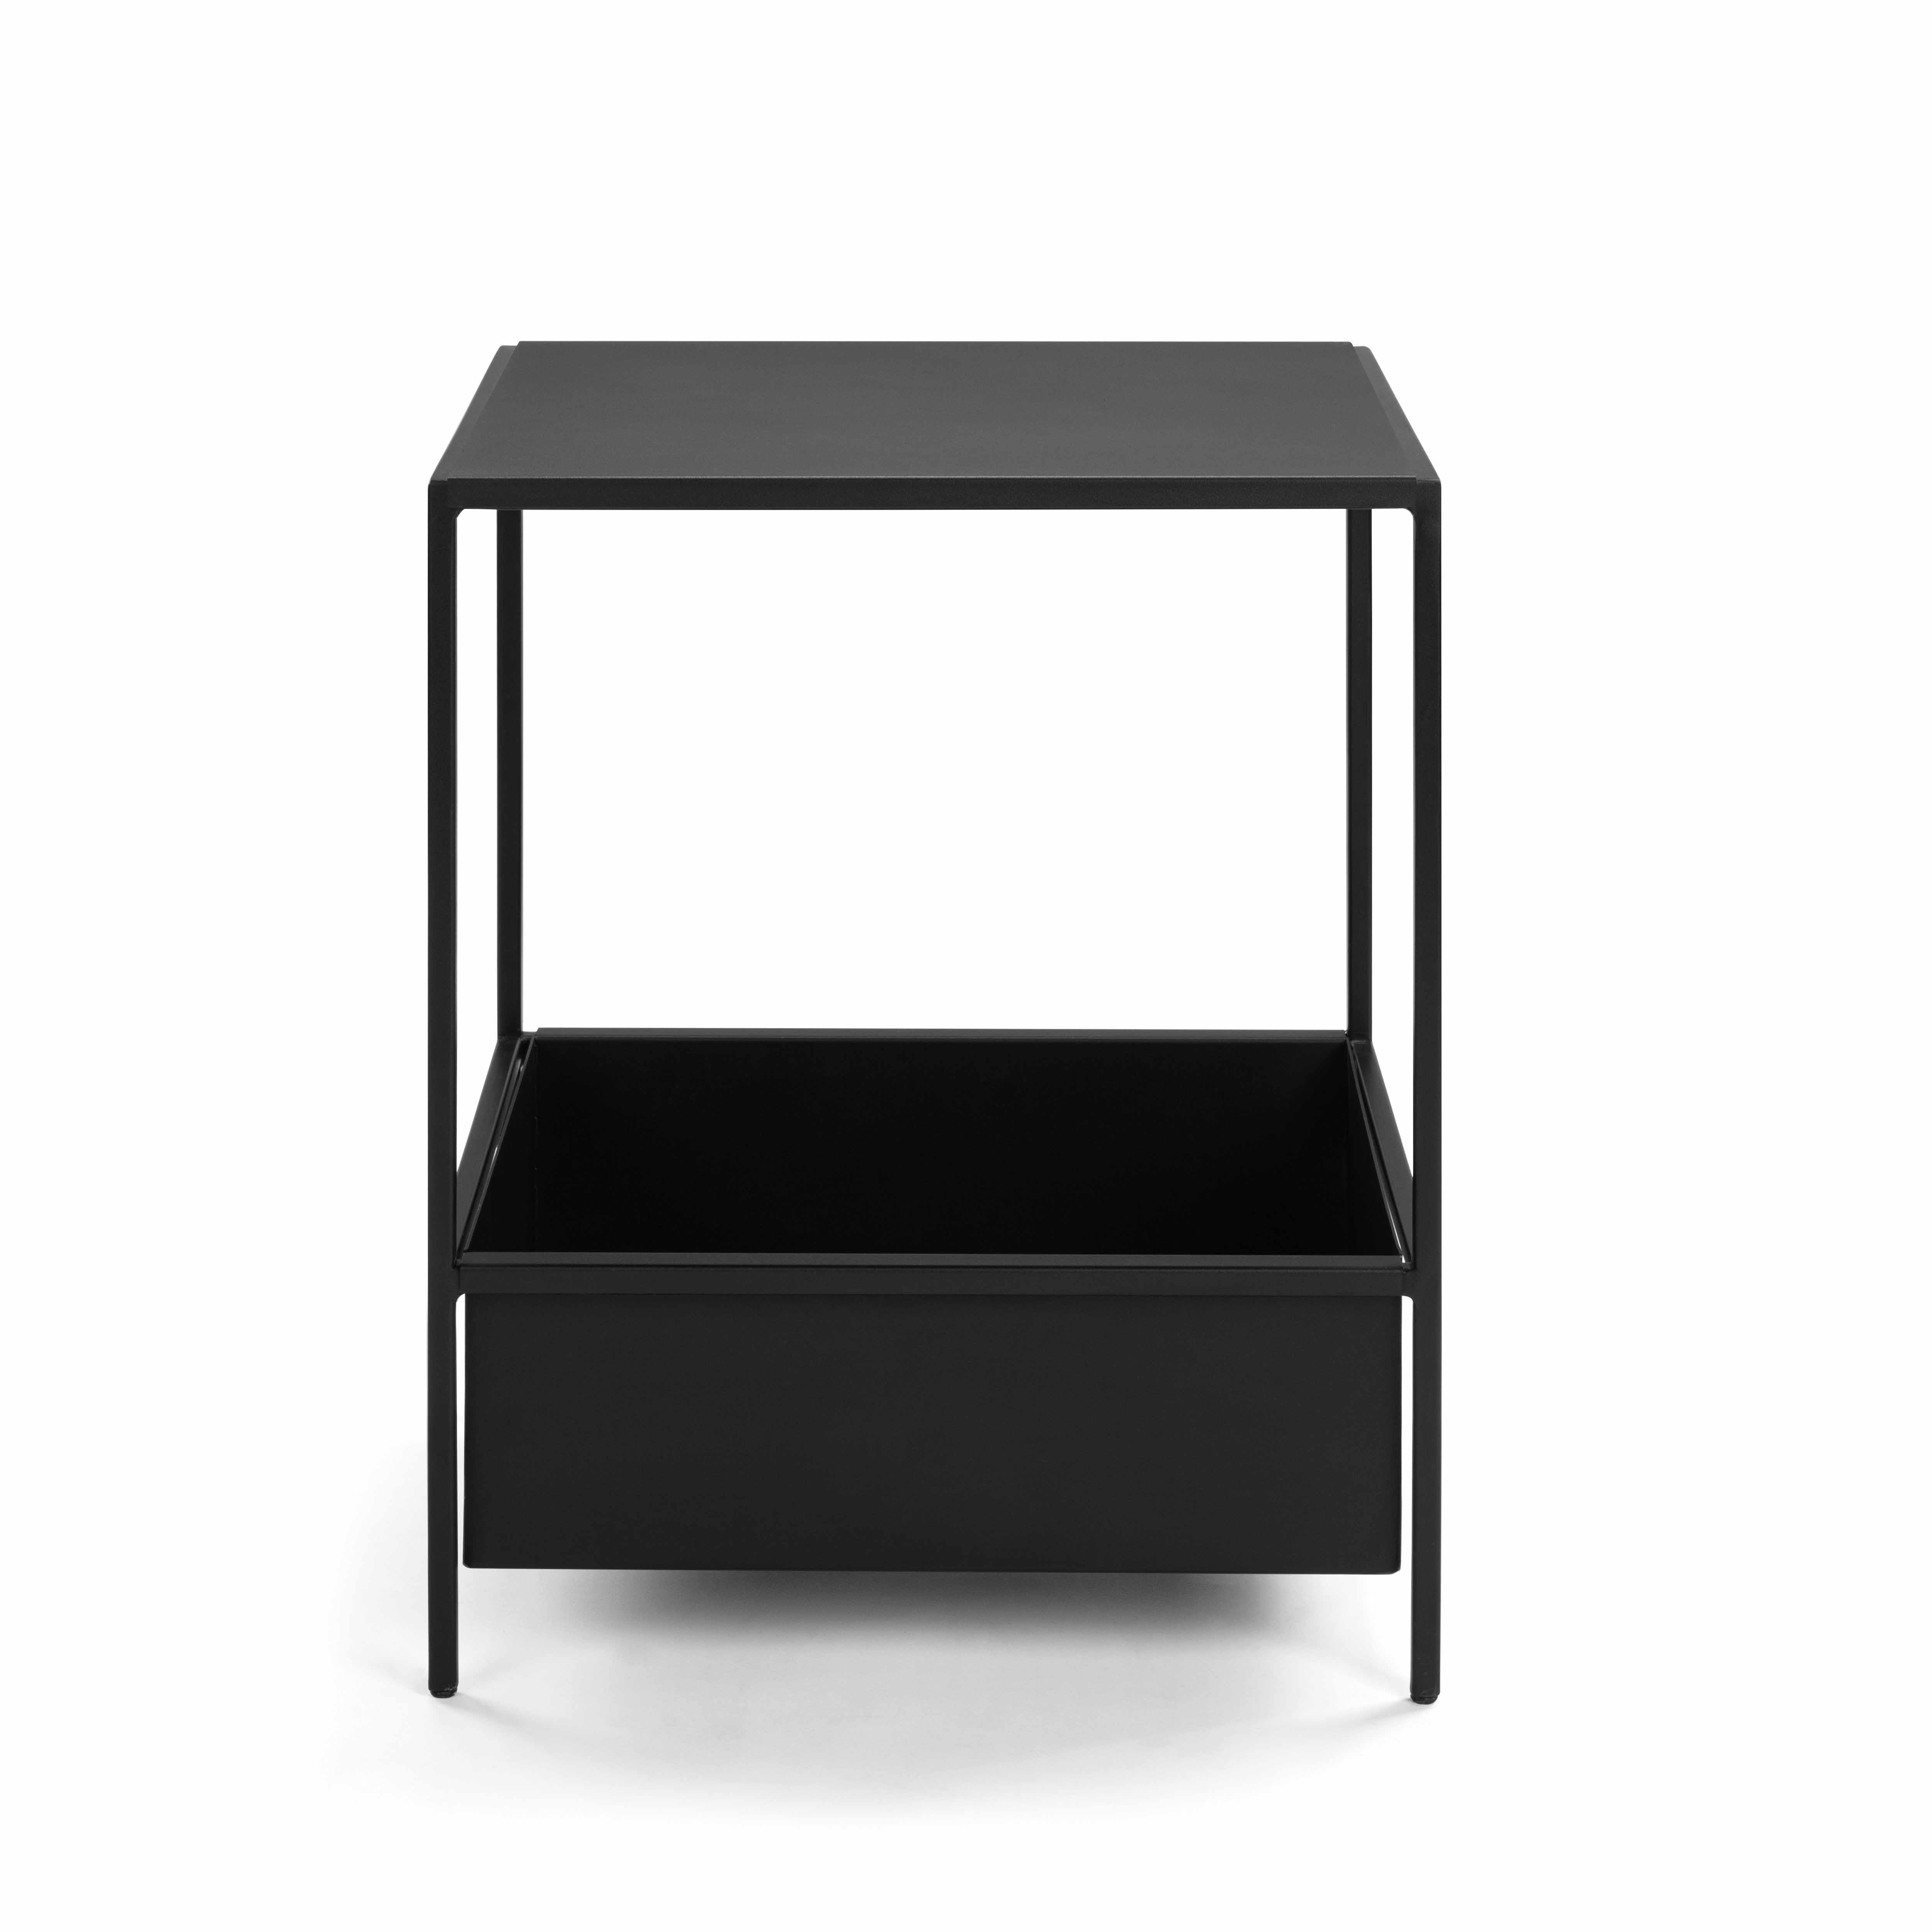 WS - Urban side table - 1x shelf, 1x planter - Black (Front)